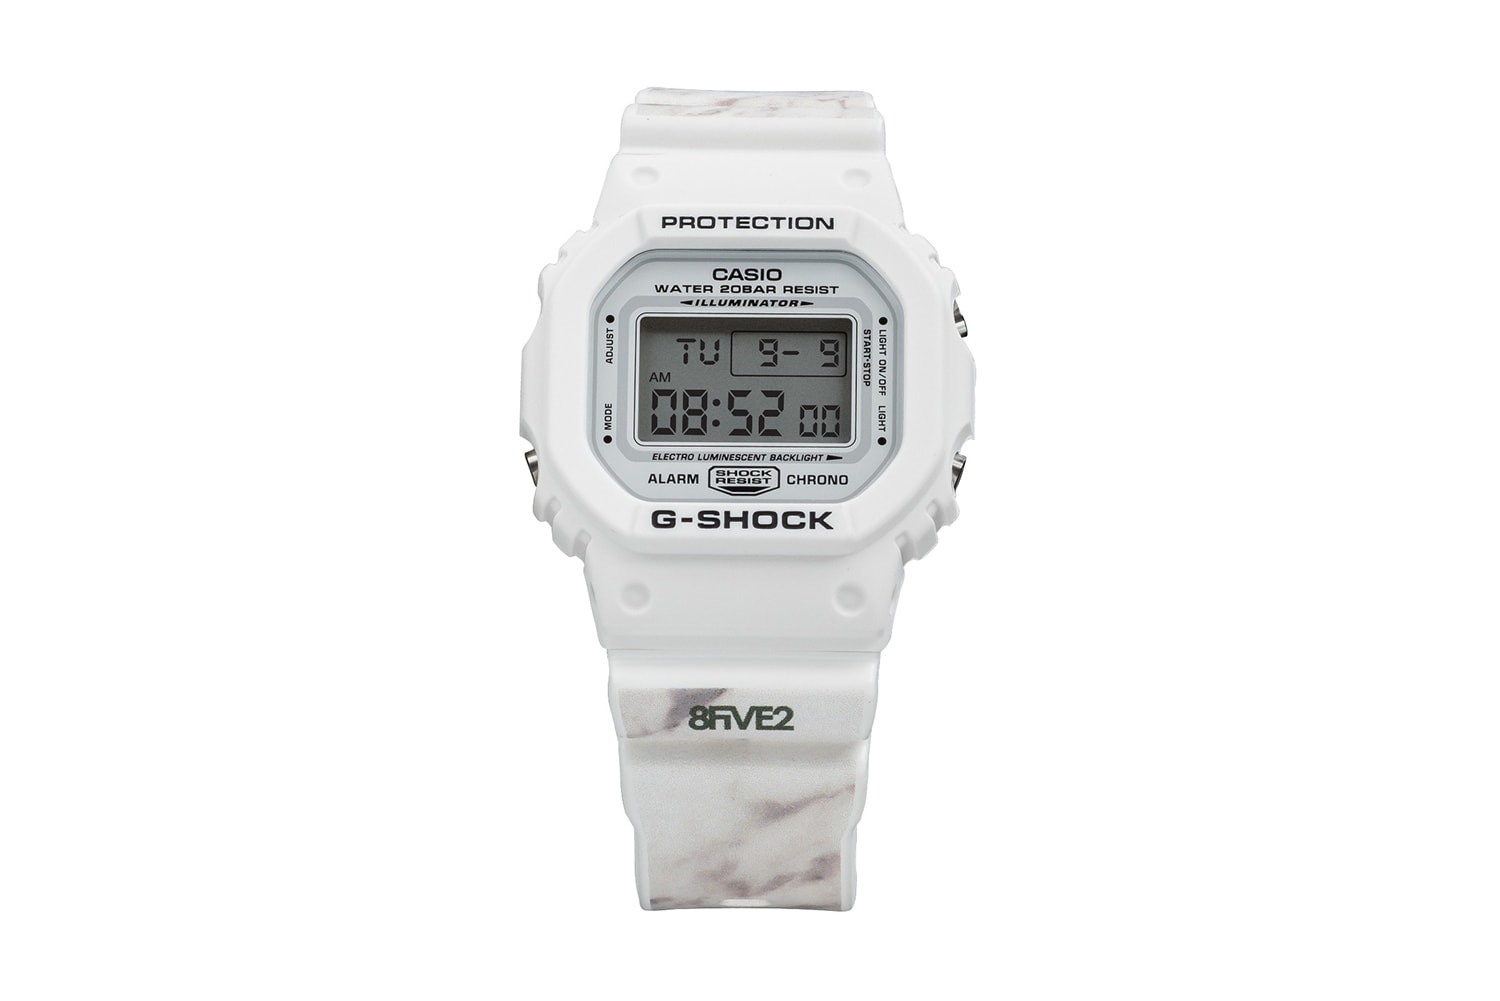 8five2 20 Year Anniversary G-Shock Release casio watches DW-5600